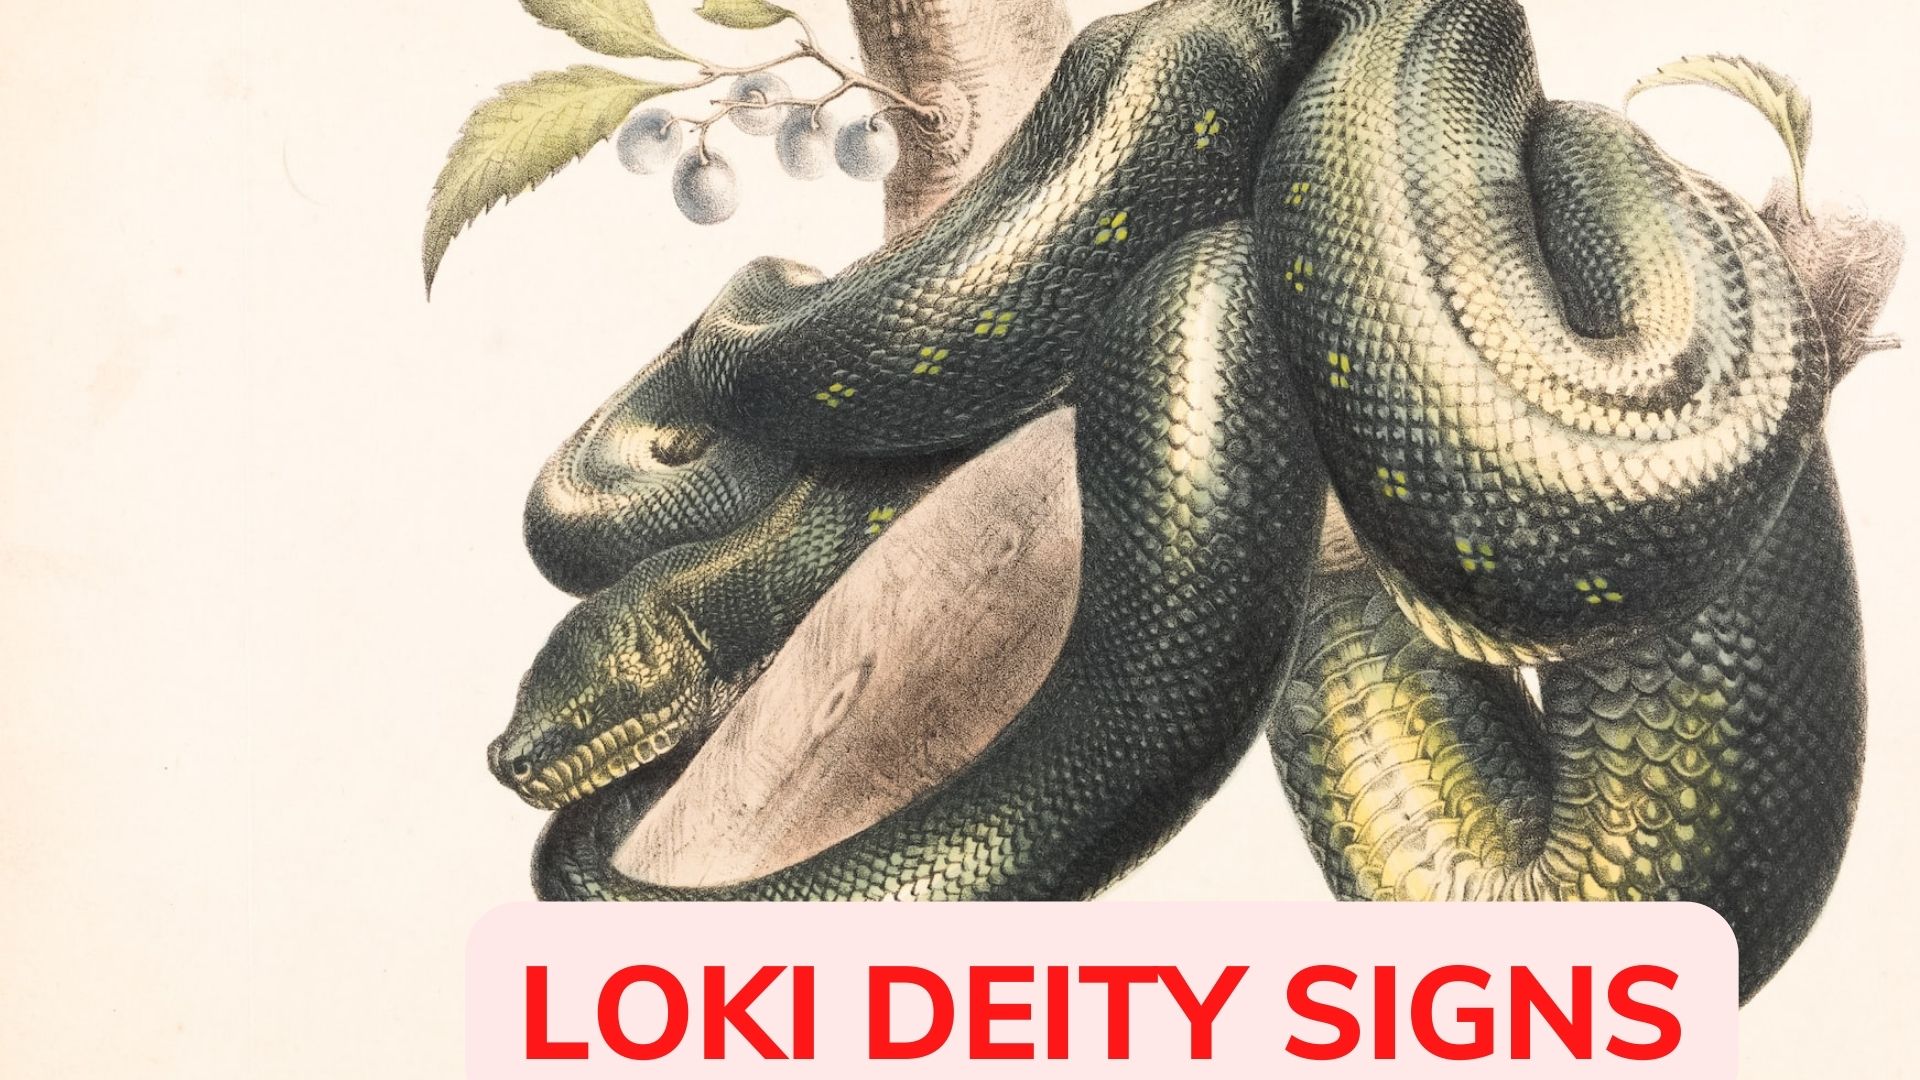 Loki Deity Signs - Symbol Of Most Prominent Snake